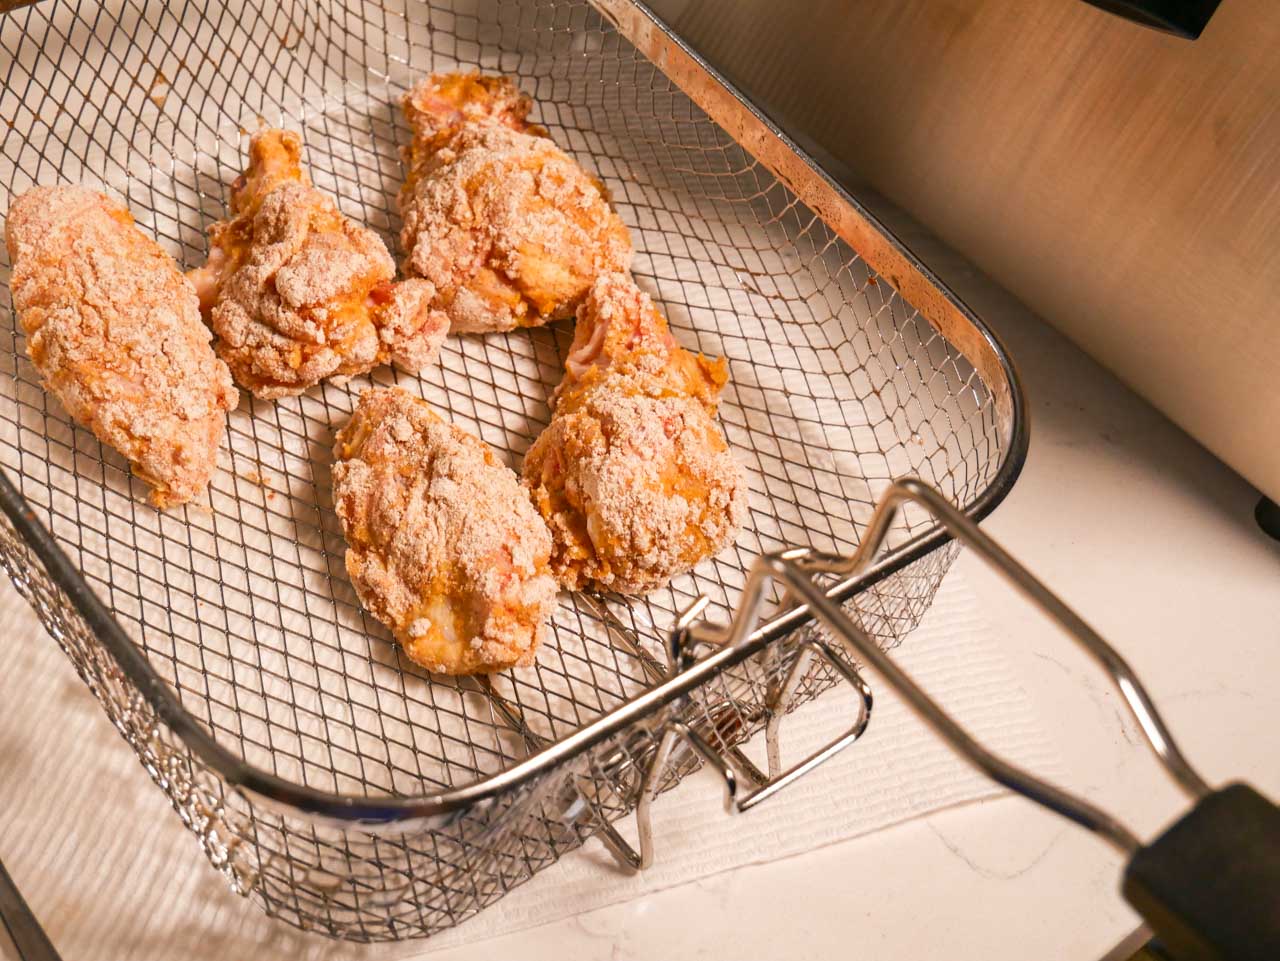 Breaded chicken wings in a fryer basket waiting to be fried